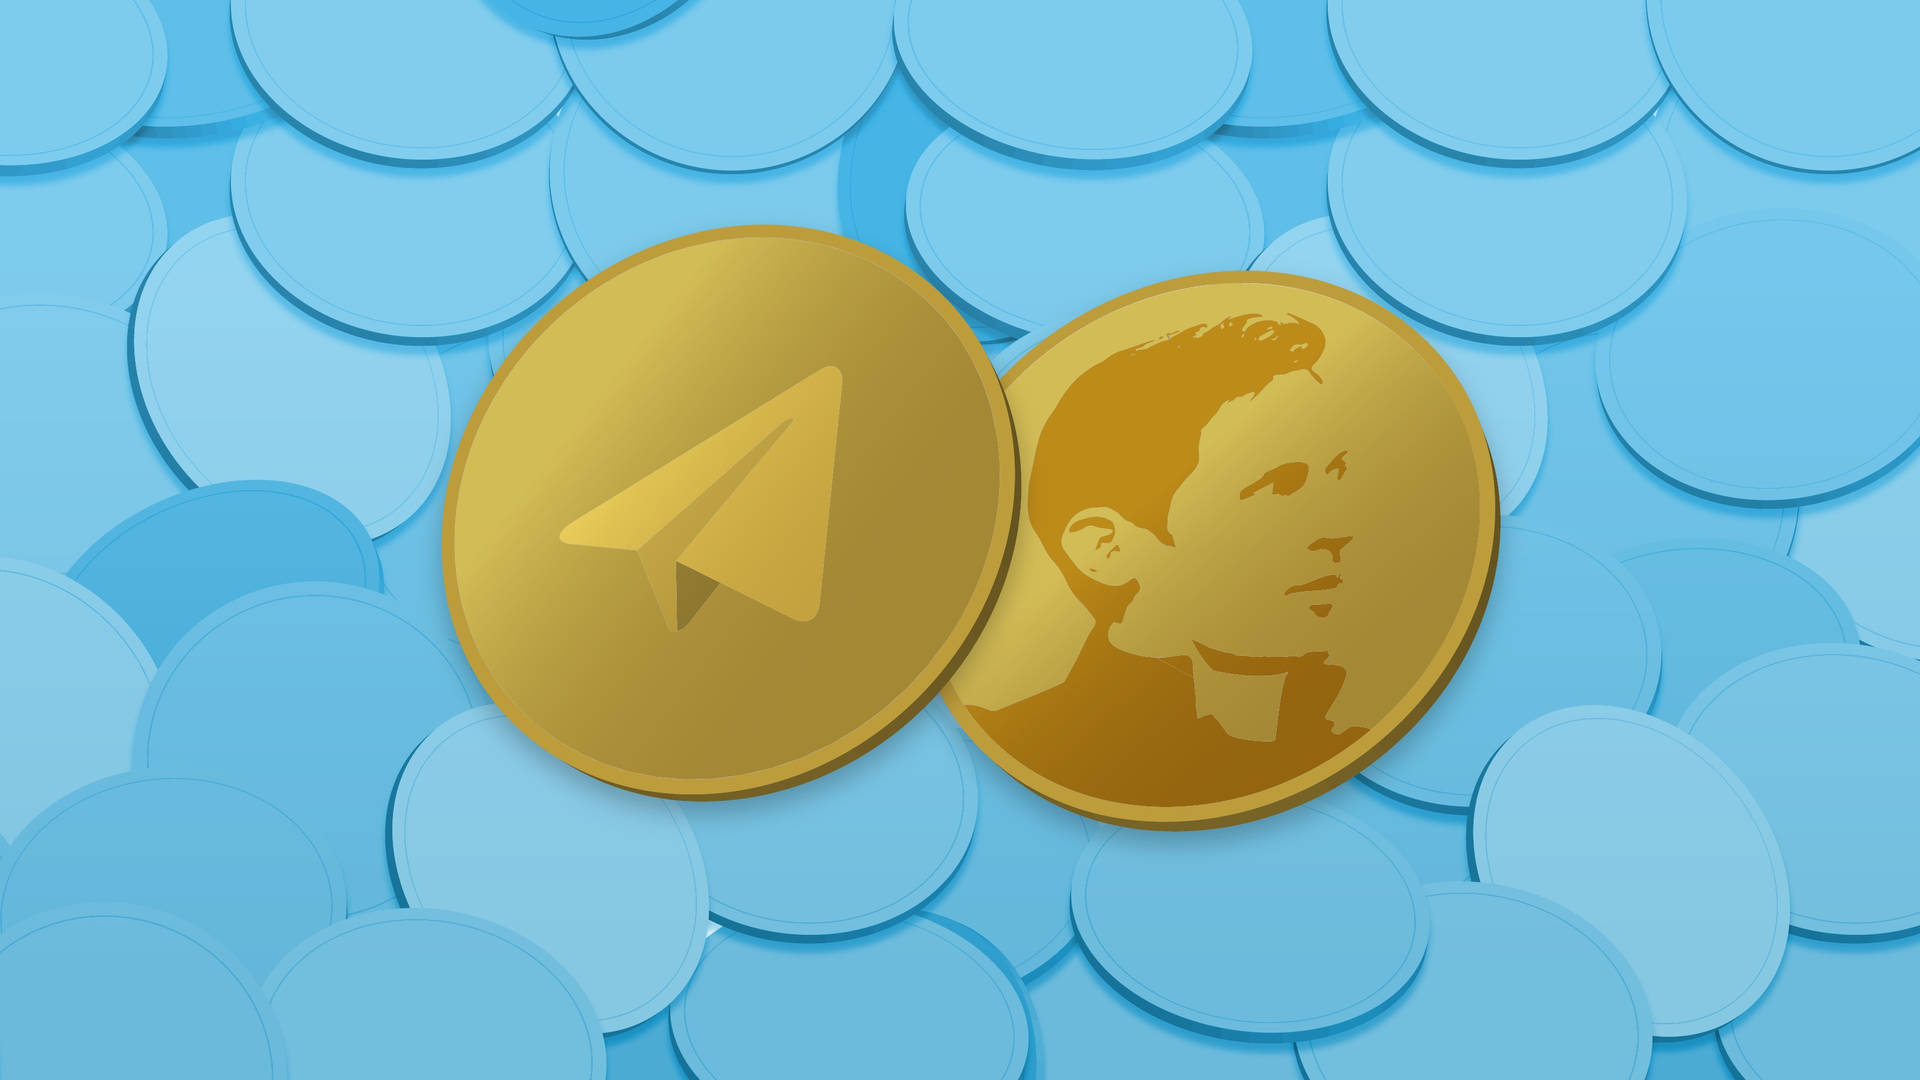 Iconode La Aplicación Telegram Con Monedas De Oro. Fondo de pantalla